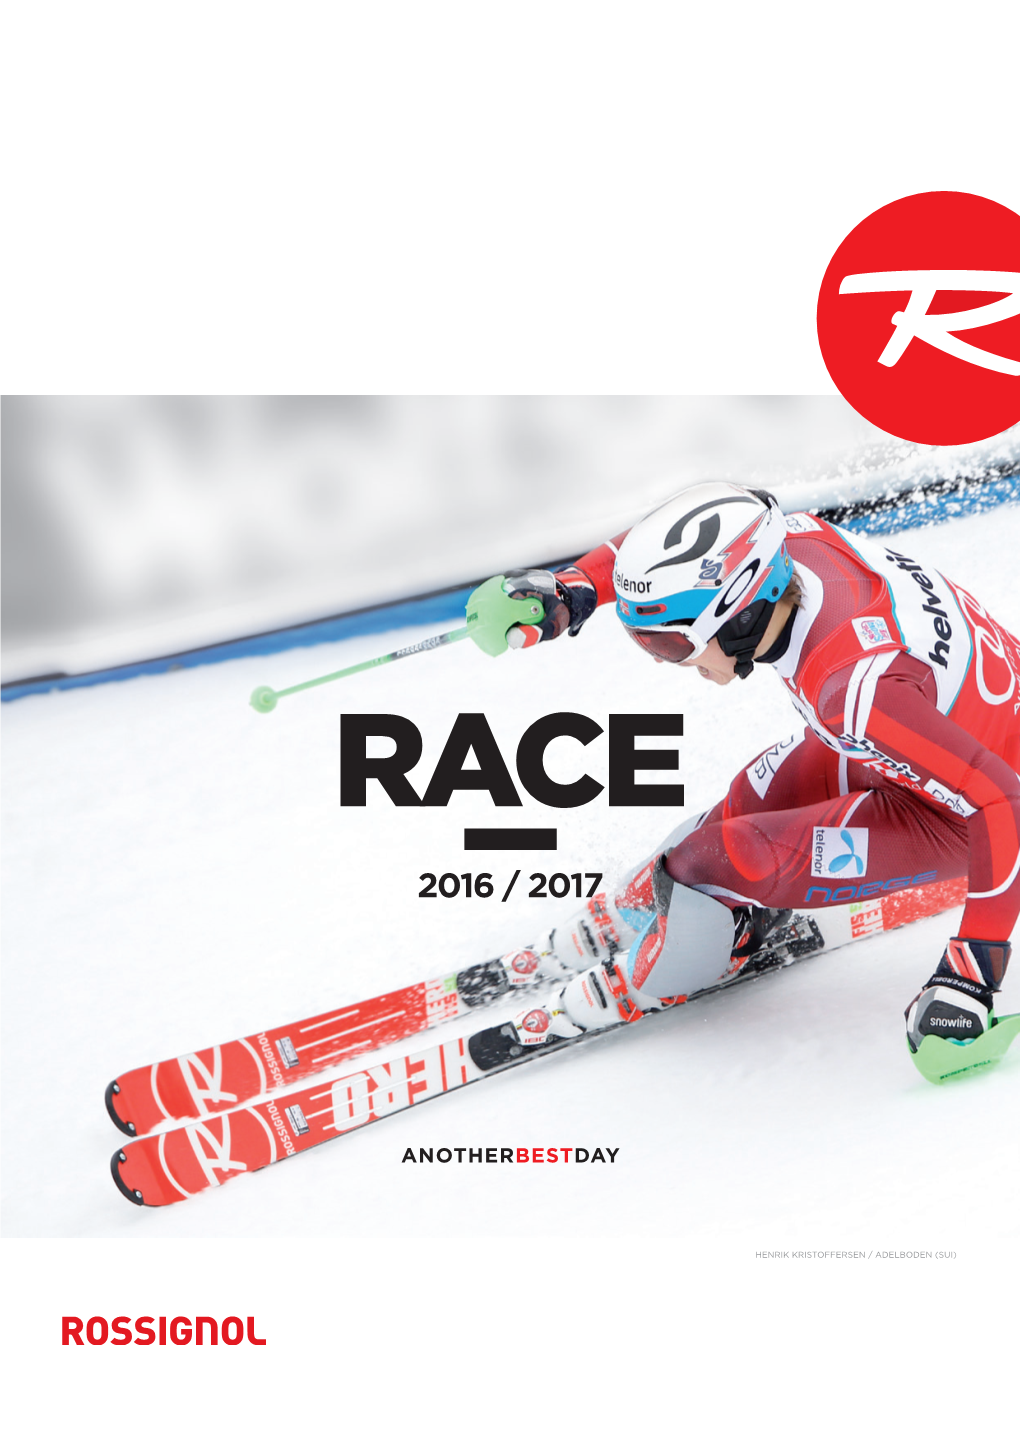 HENRIK KRISTOFFERSEN / ADELBODEN (SUI) 16 16 RACE FIS 17 17 RACE FIS P.2 P.3